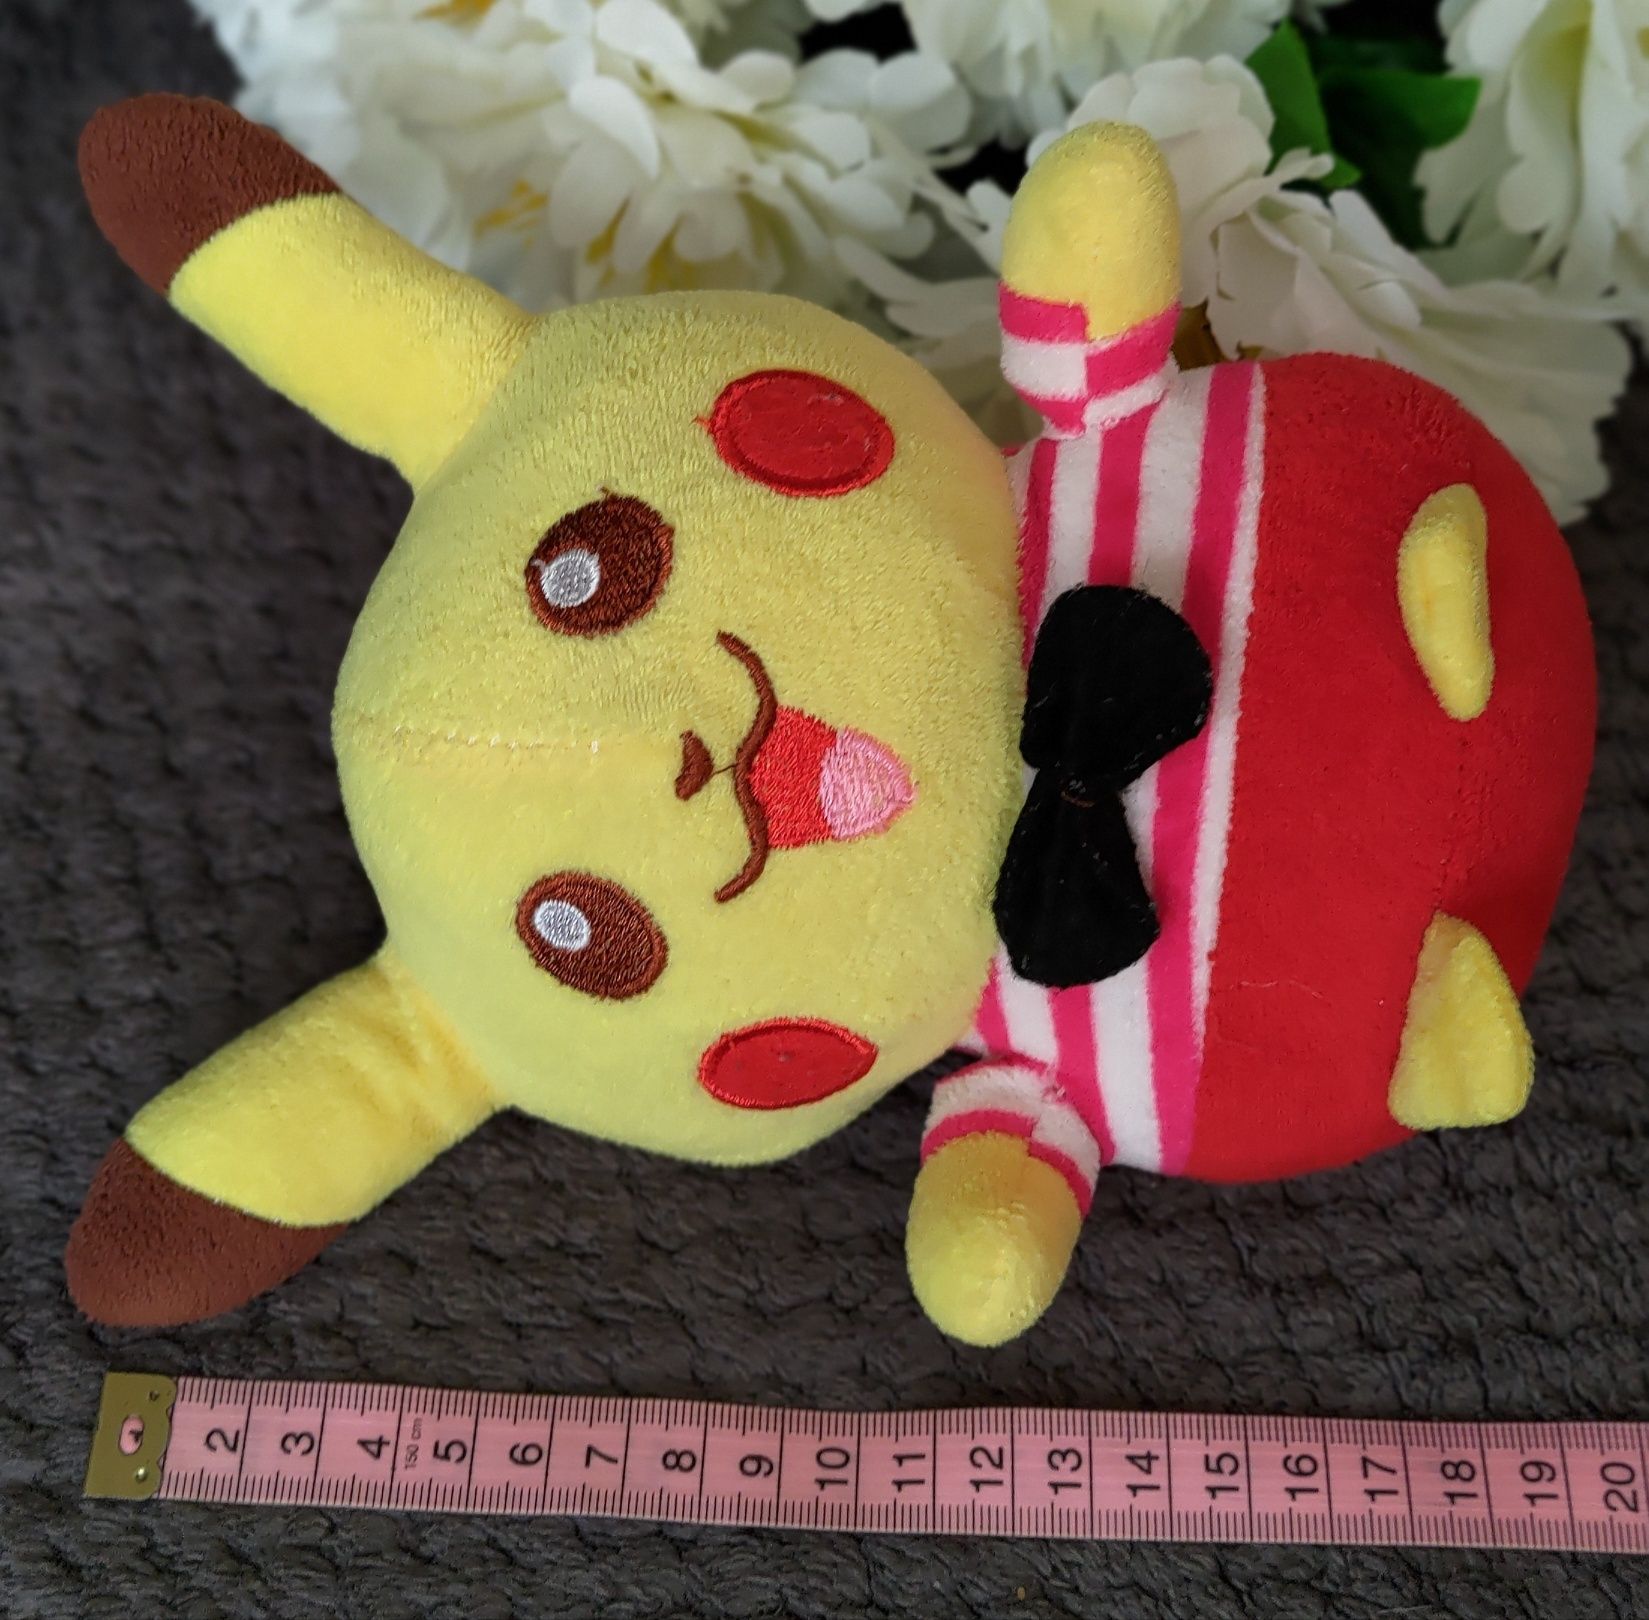 Pokemon Pikachu pluszowa zabawka.